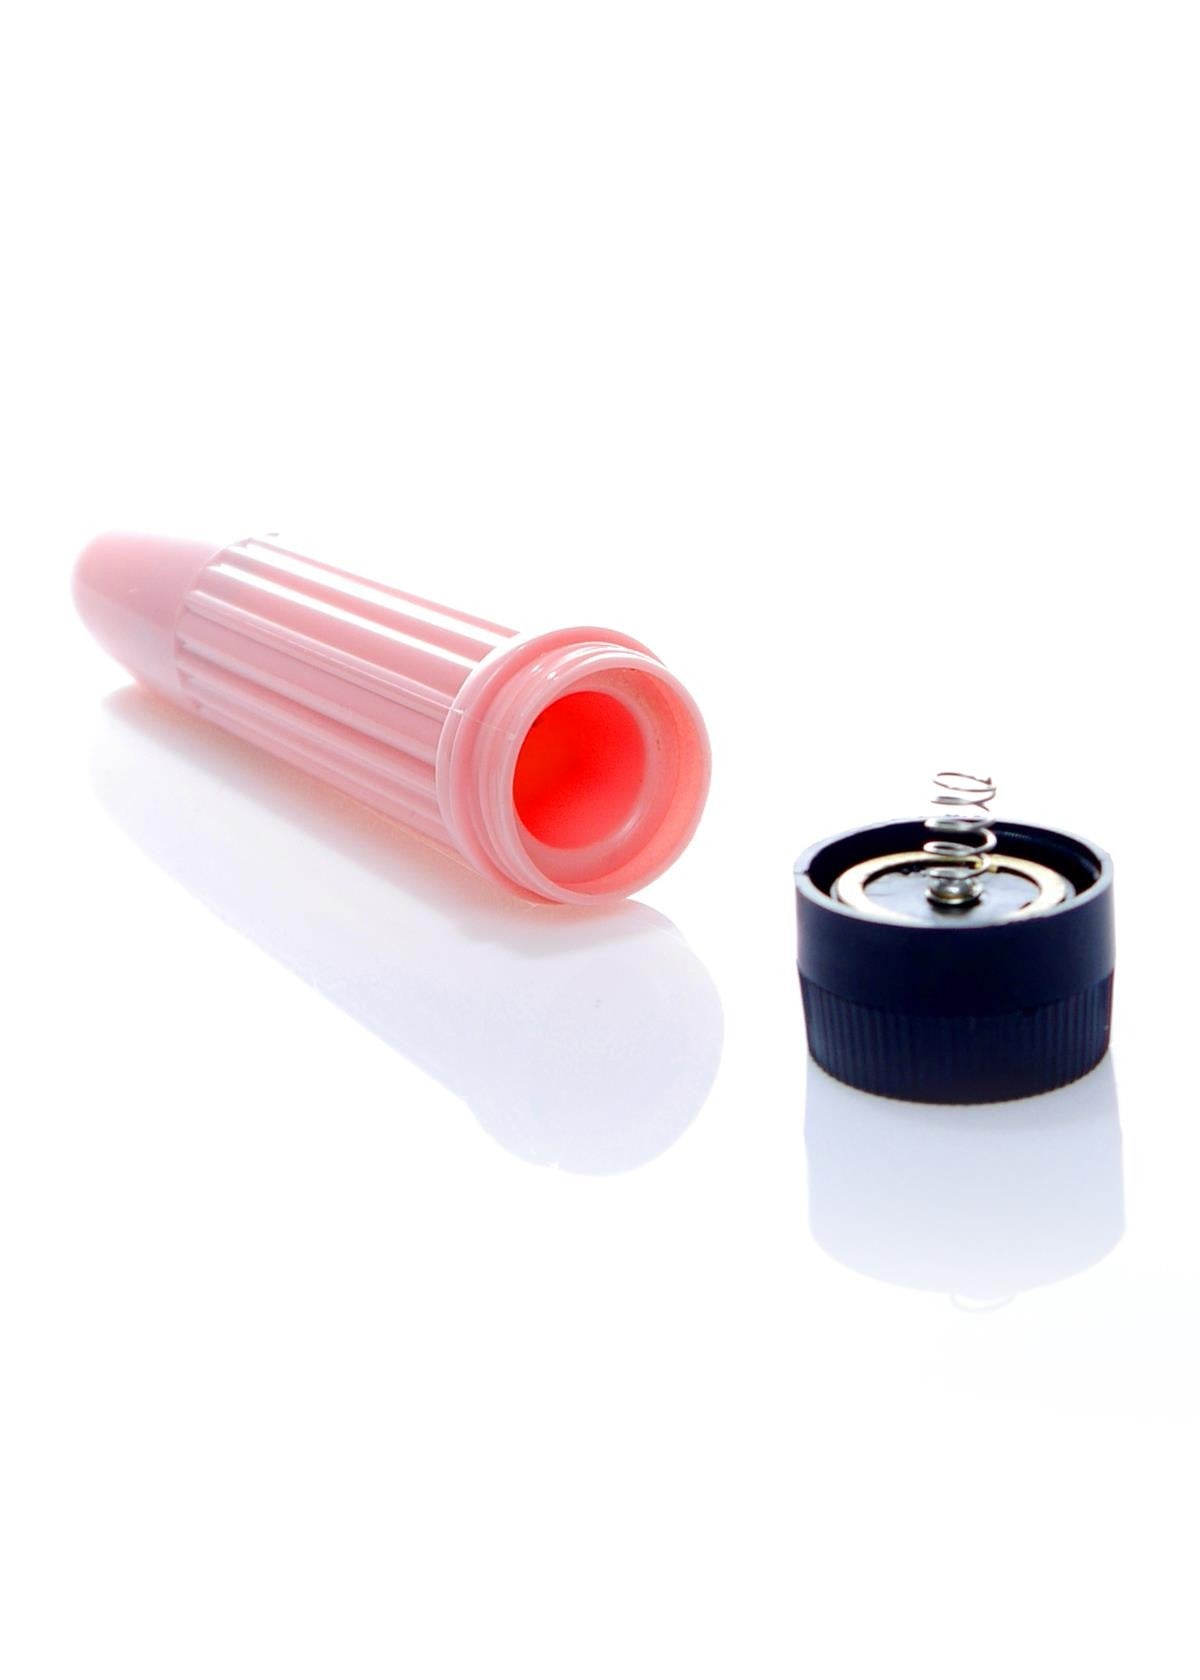 Bossoftoys - 46-00014 - Mini vibrator -  Lady finger - 13 cm - dia 2,5 cm - Pink - Window colourbox